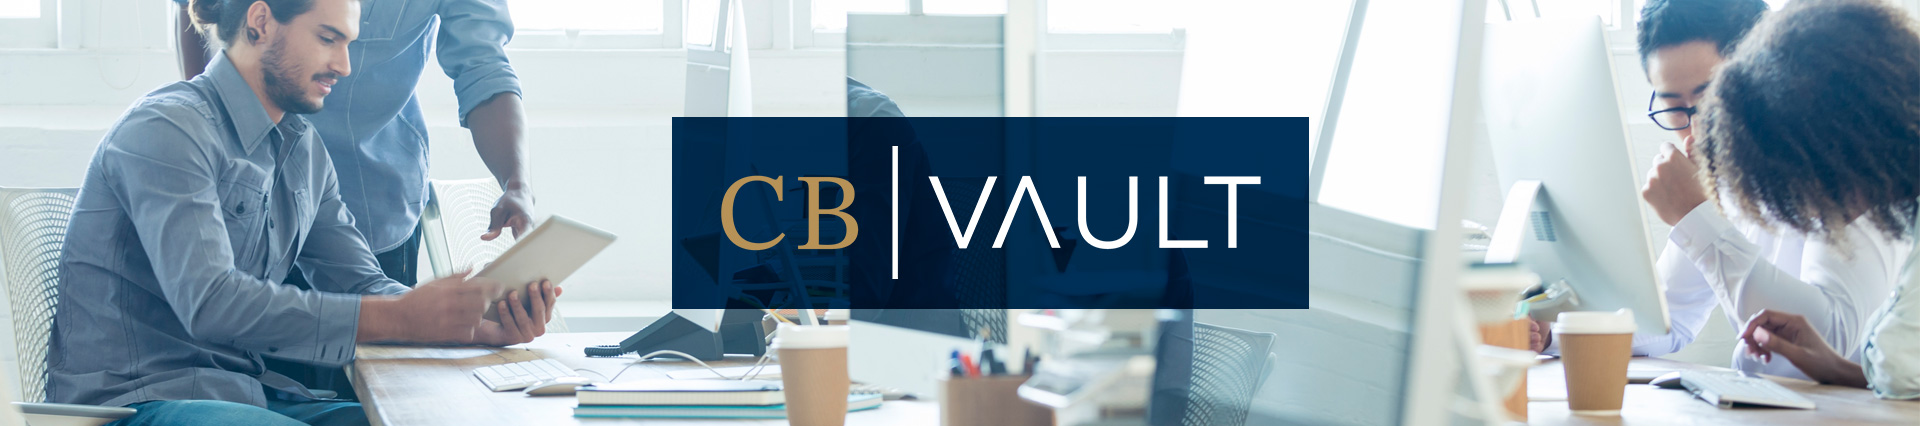 CB Vault - Central Bank's Entrepreneur and Startup Help Center